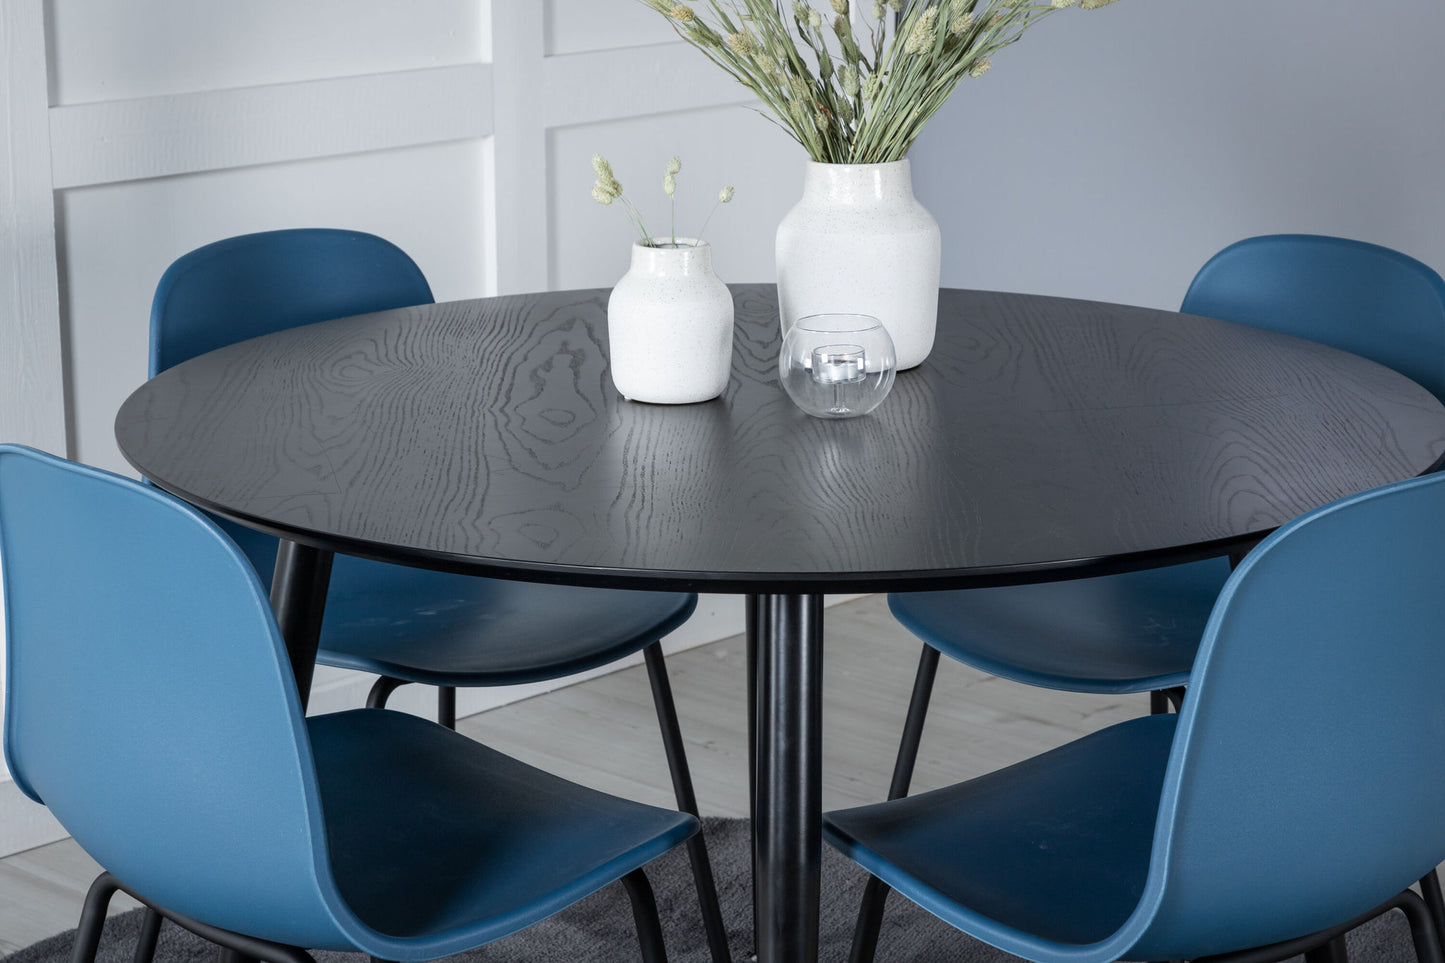 Dipp - Spisebord, 115cm - Sort finér / All sort ben +Arctic Spisebordsstol - Sorte ben - Blå Plast